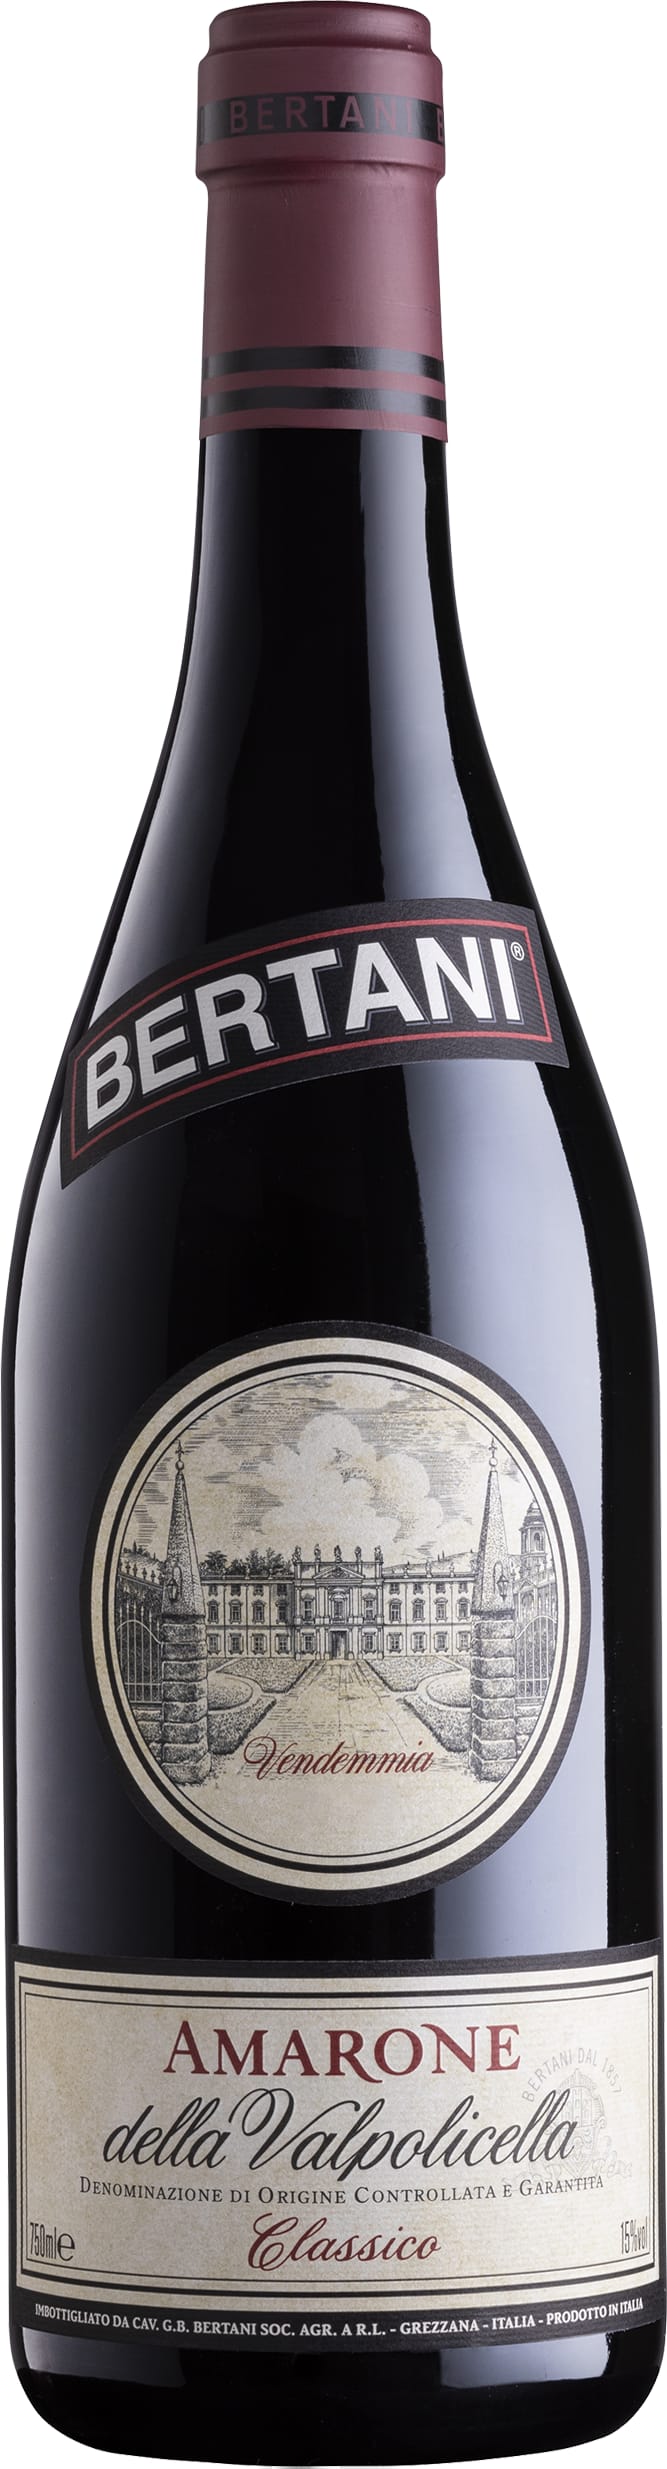 Bertani Amarone Classico 1994 75cl - Buy Bertani Wines from GREAT WINES DIRECT wine shop